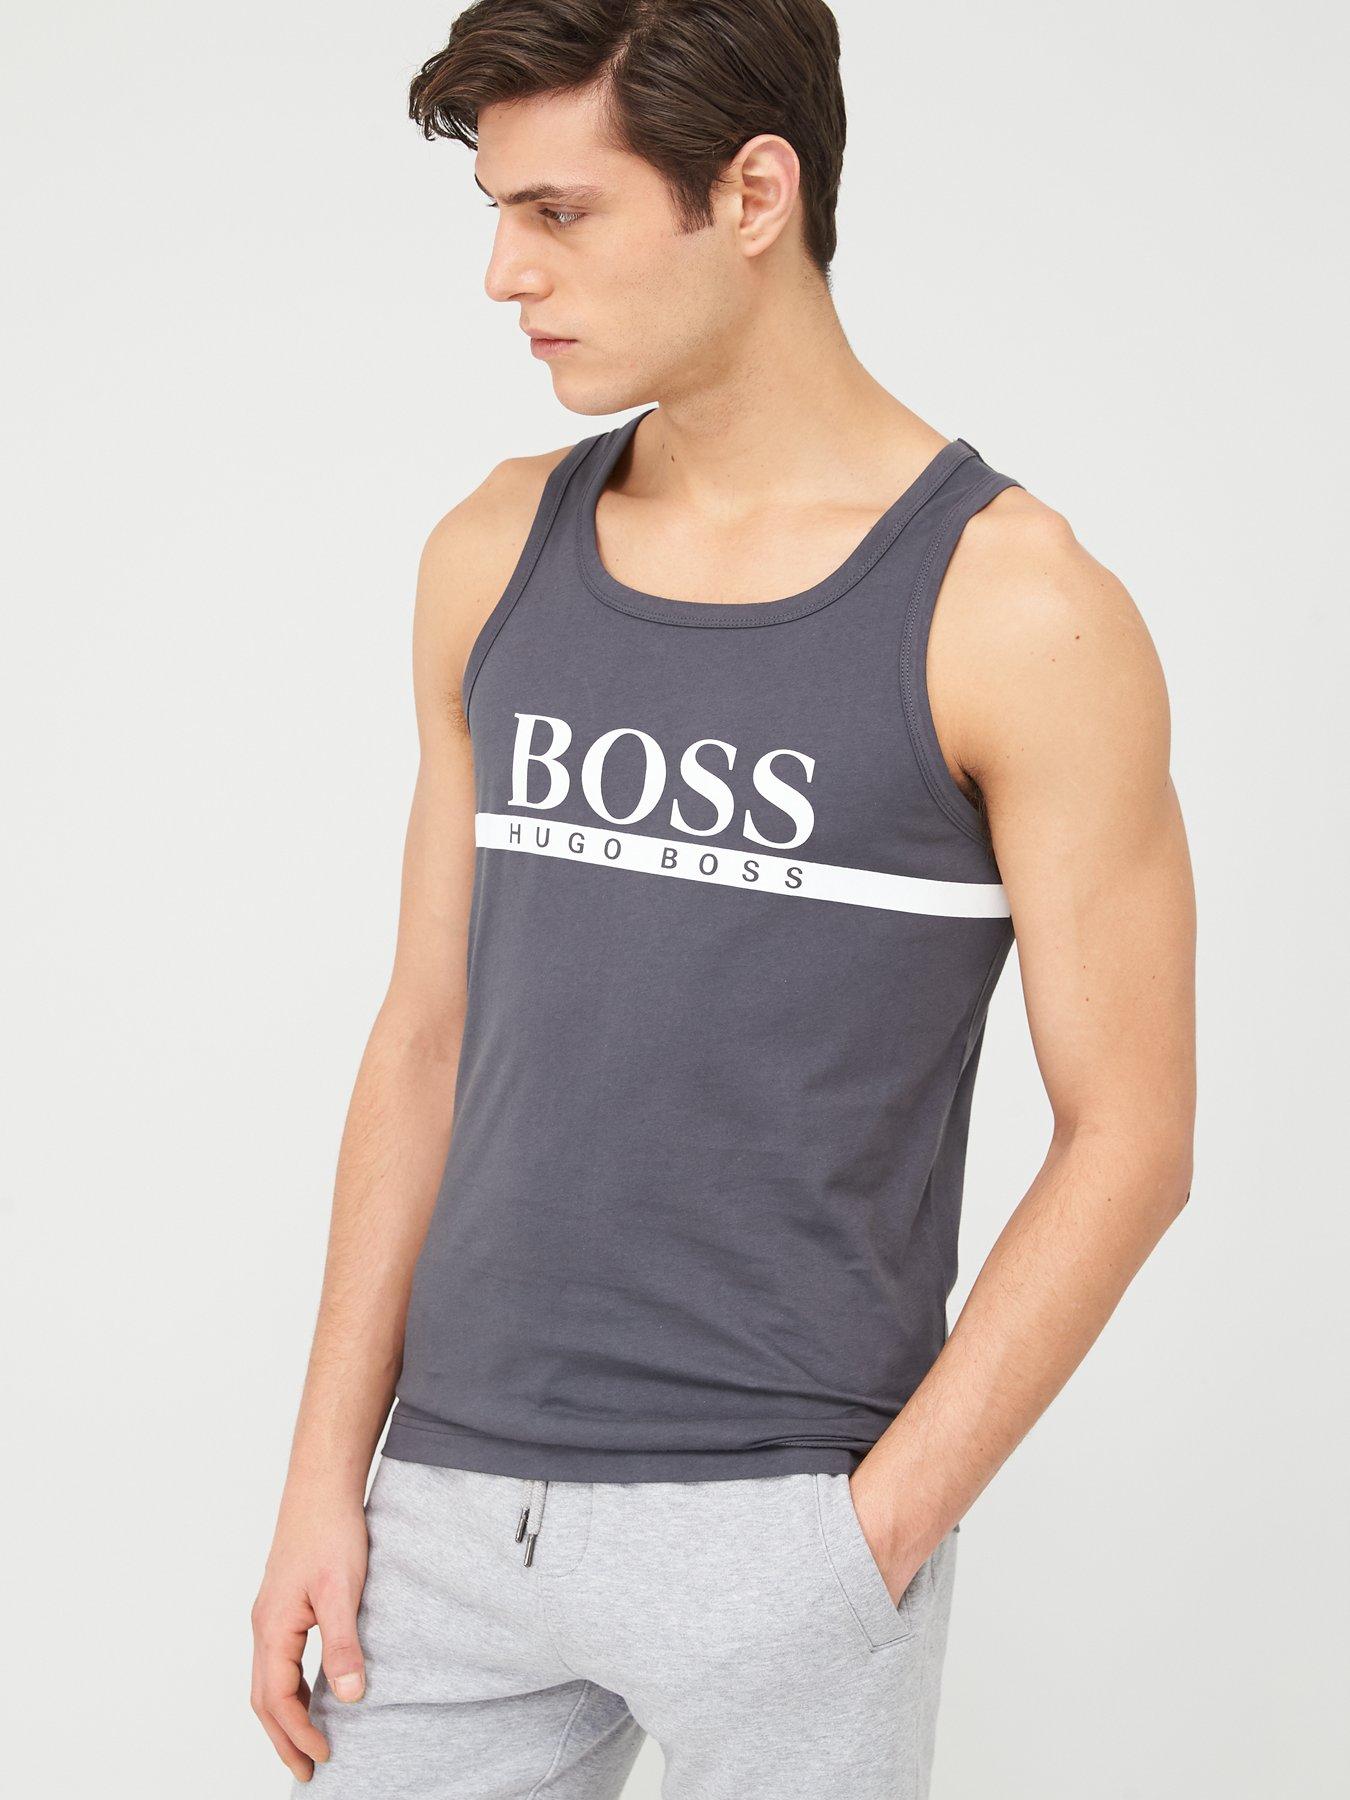 Hugo Boss Mens Undershirts